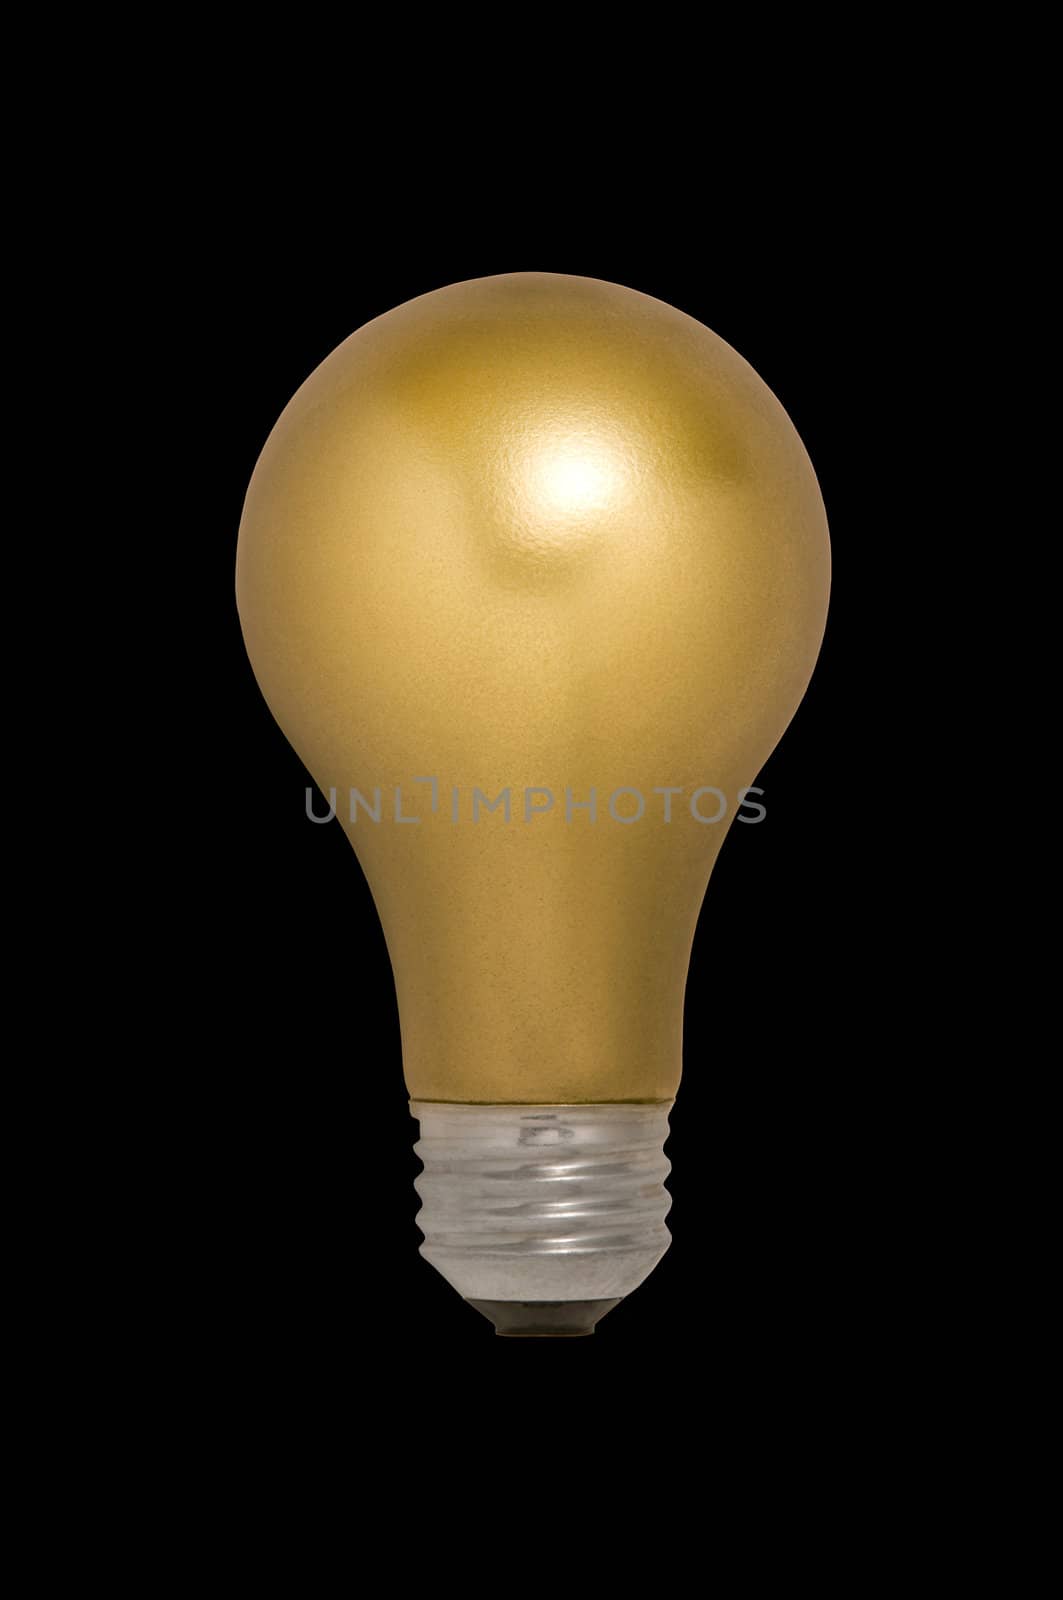 Gold Light Bulb Floating Against a Black Background